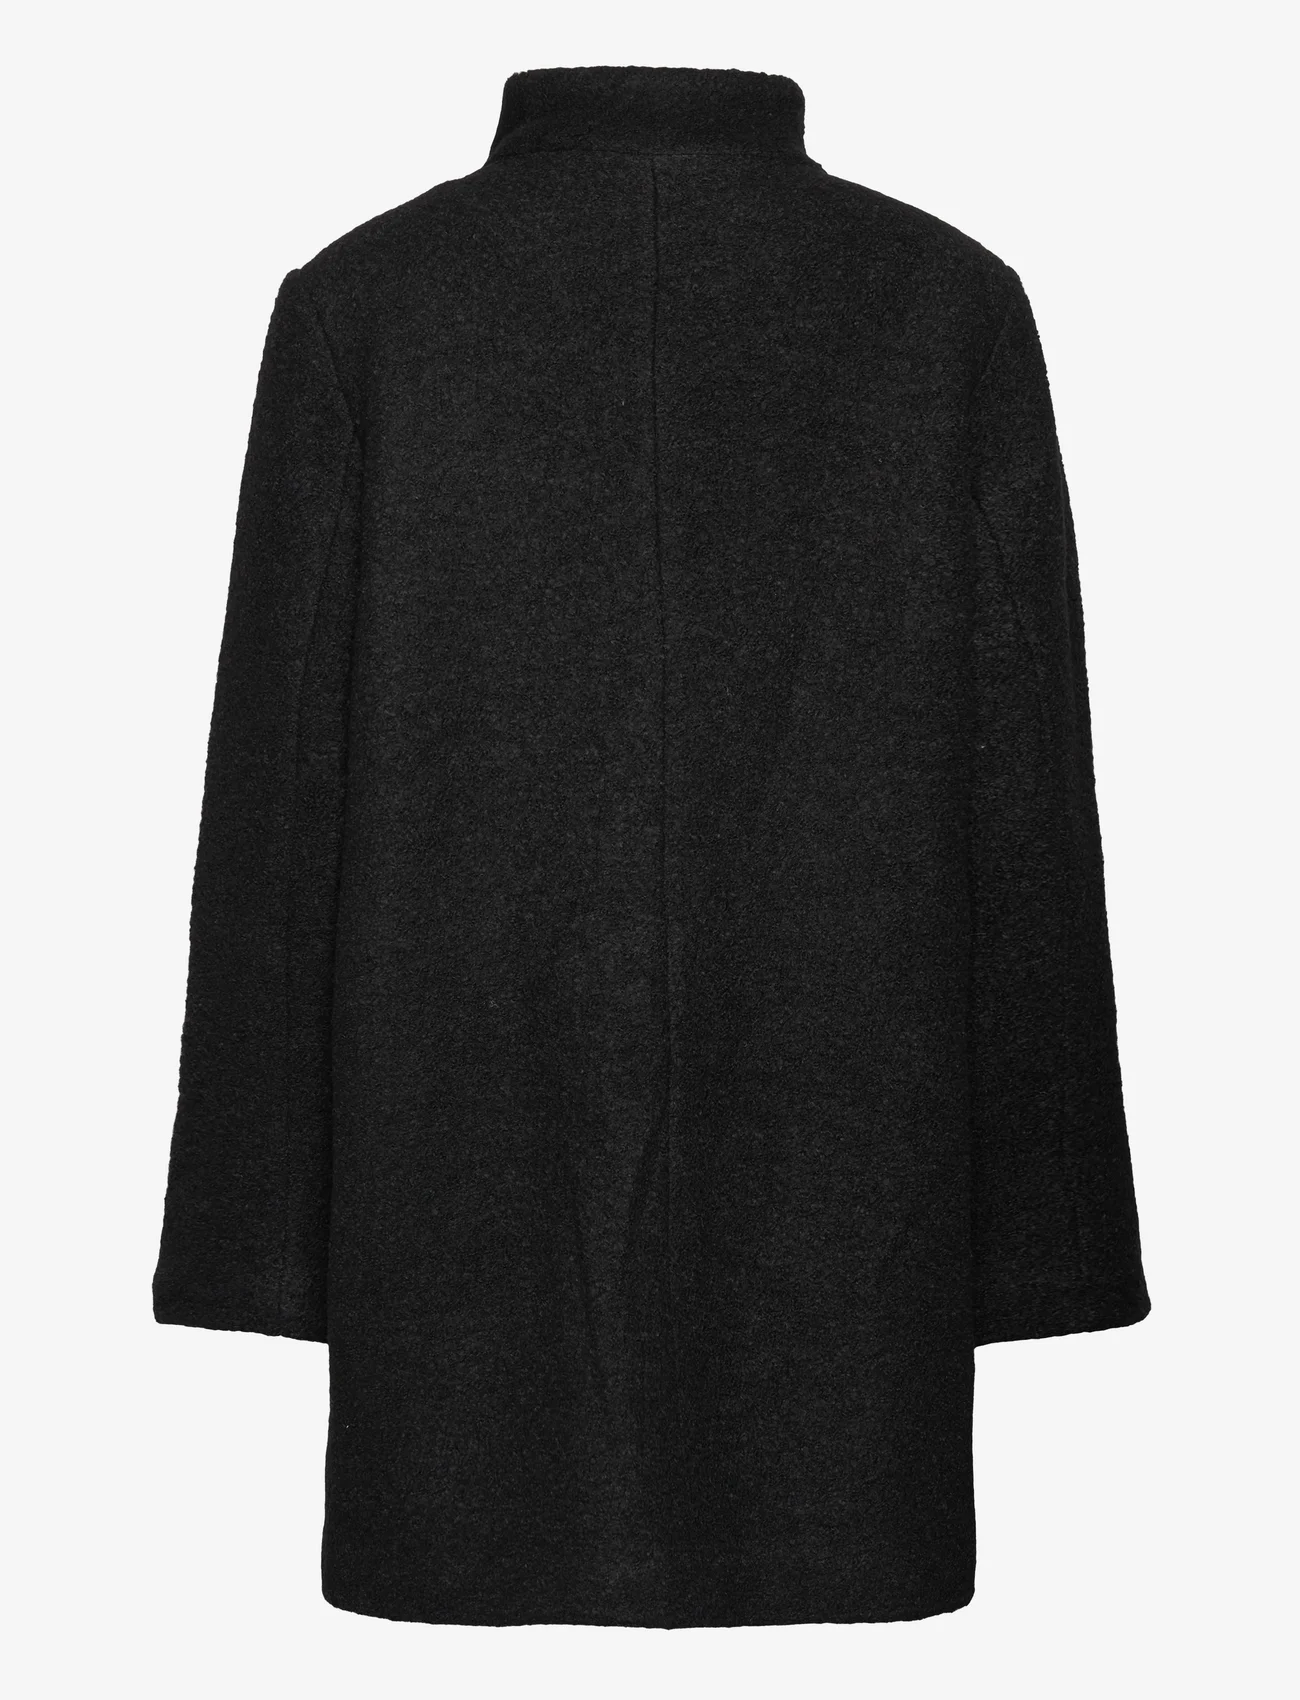 Brandtex - Coat Outerwear Light - winter jackets - black - 1